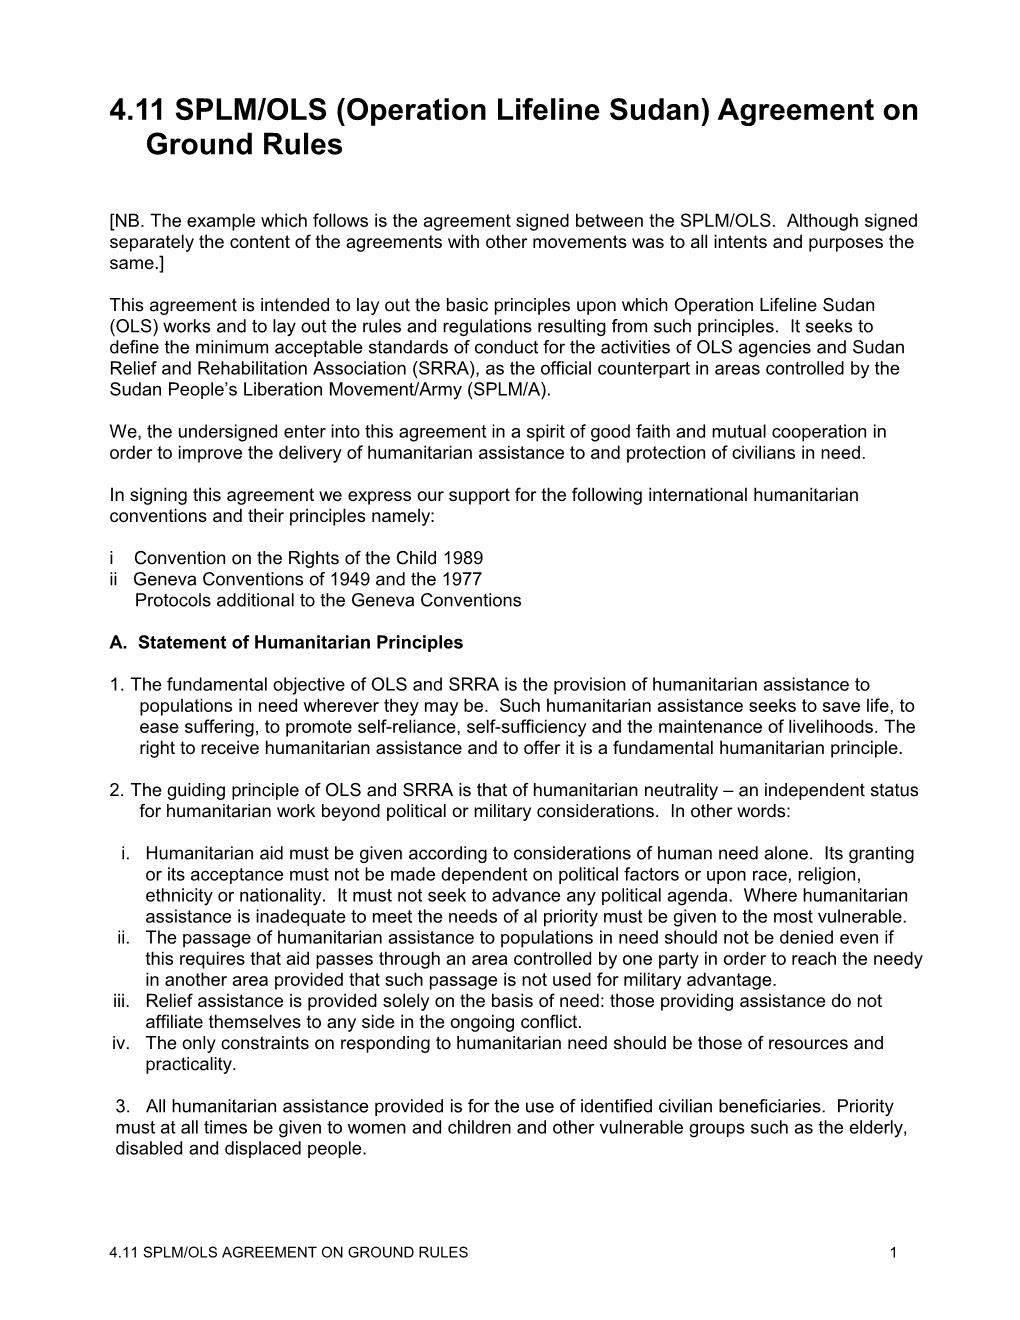 4.11SPLM/OLS (Operation Lifeline Sudan) Agreement Onground Rules